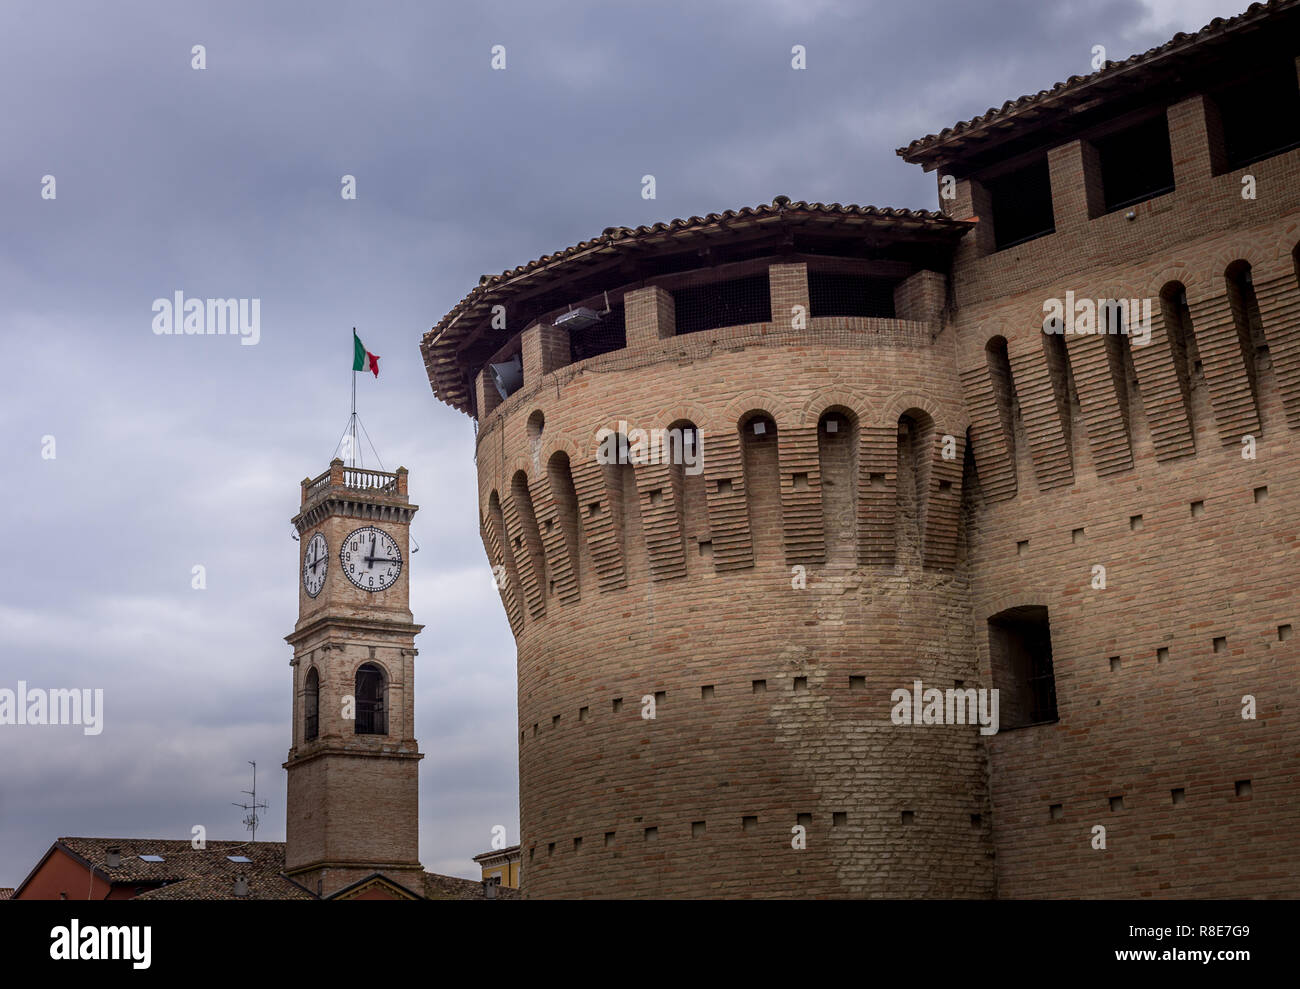 Vista de la ciudad italiana con castillo medival gótica fortezza en Forlimpopoli , provincia de Forli Cesena, Emilia Romagna, Italia Foto de stock